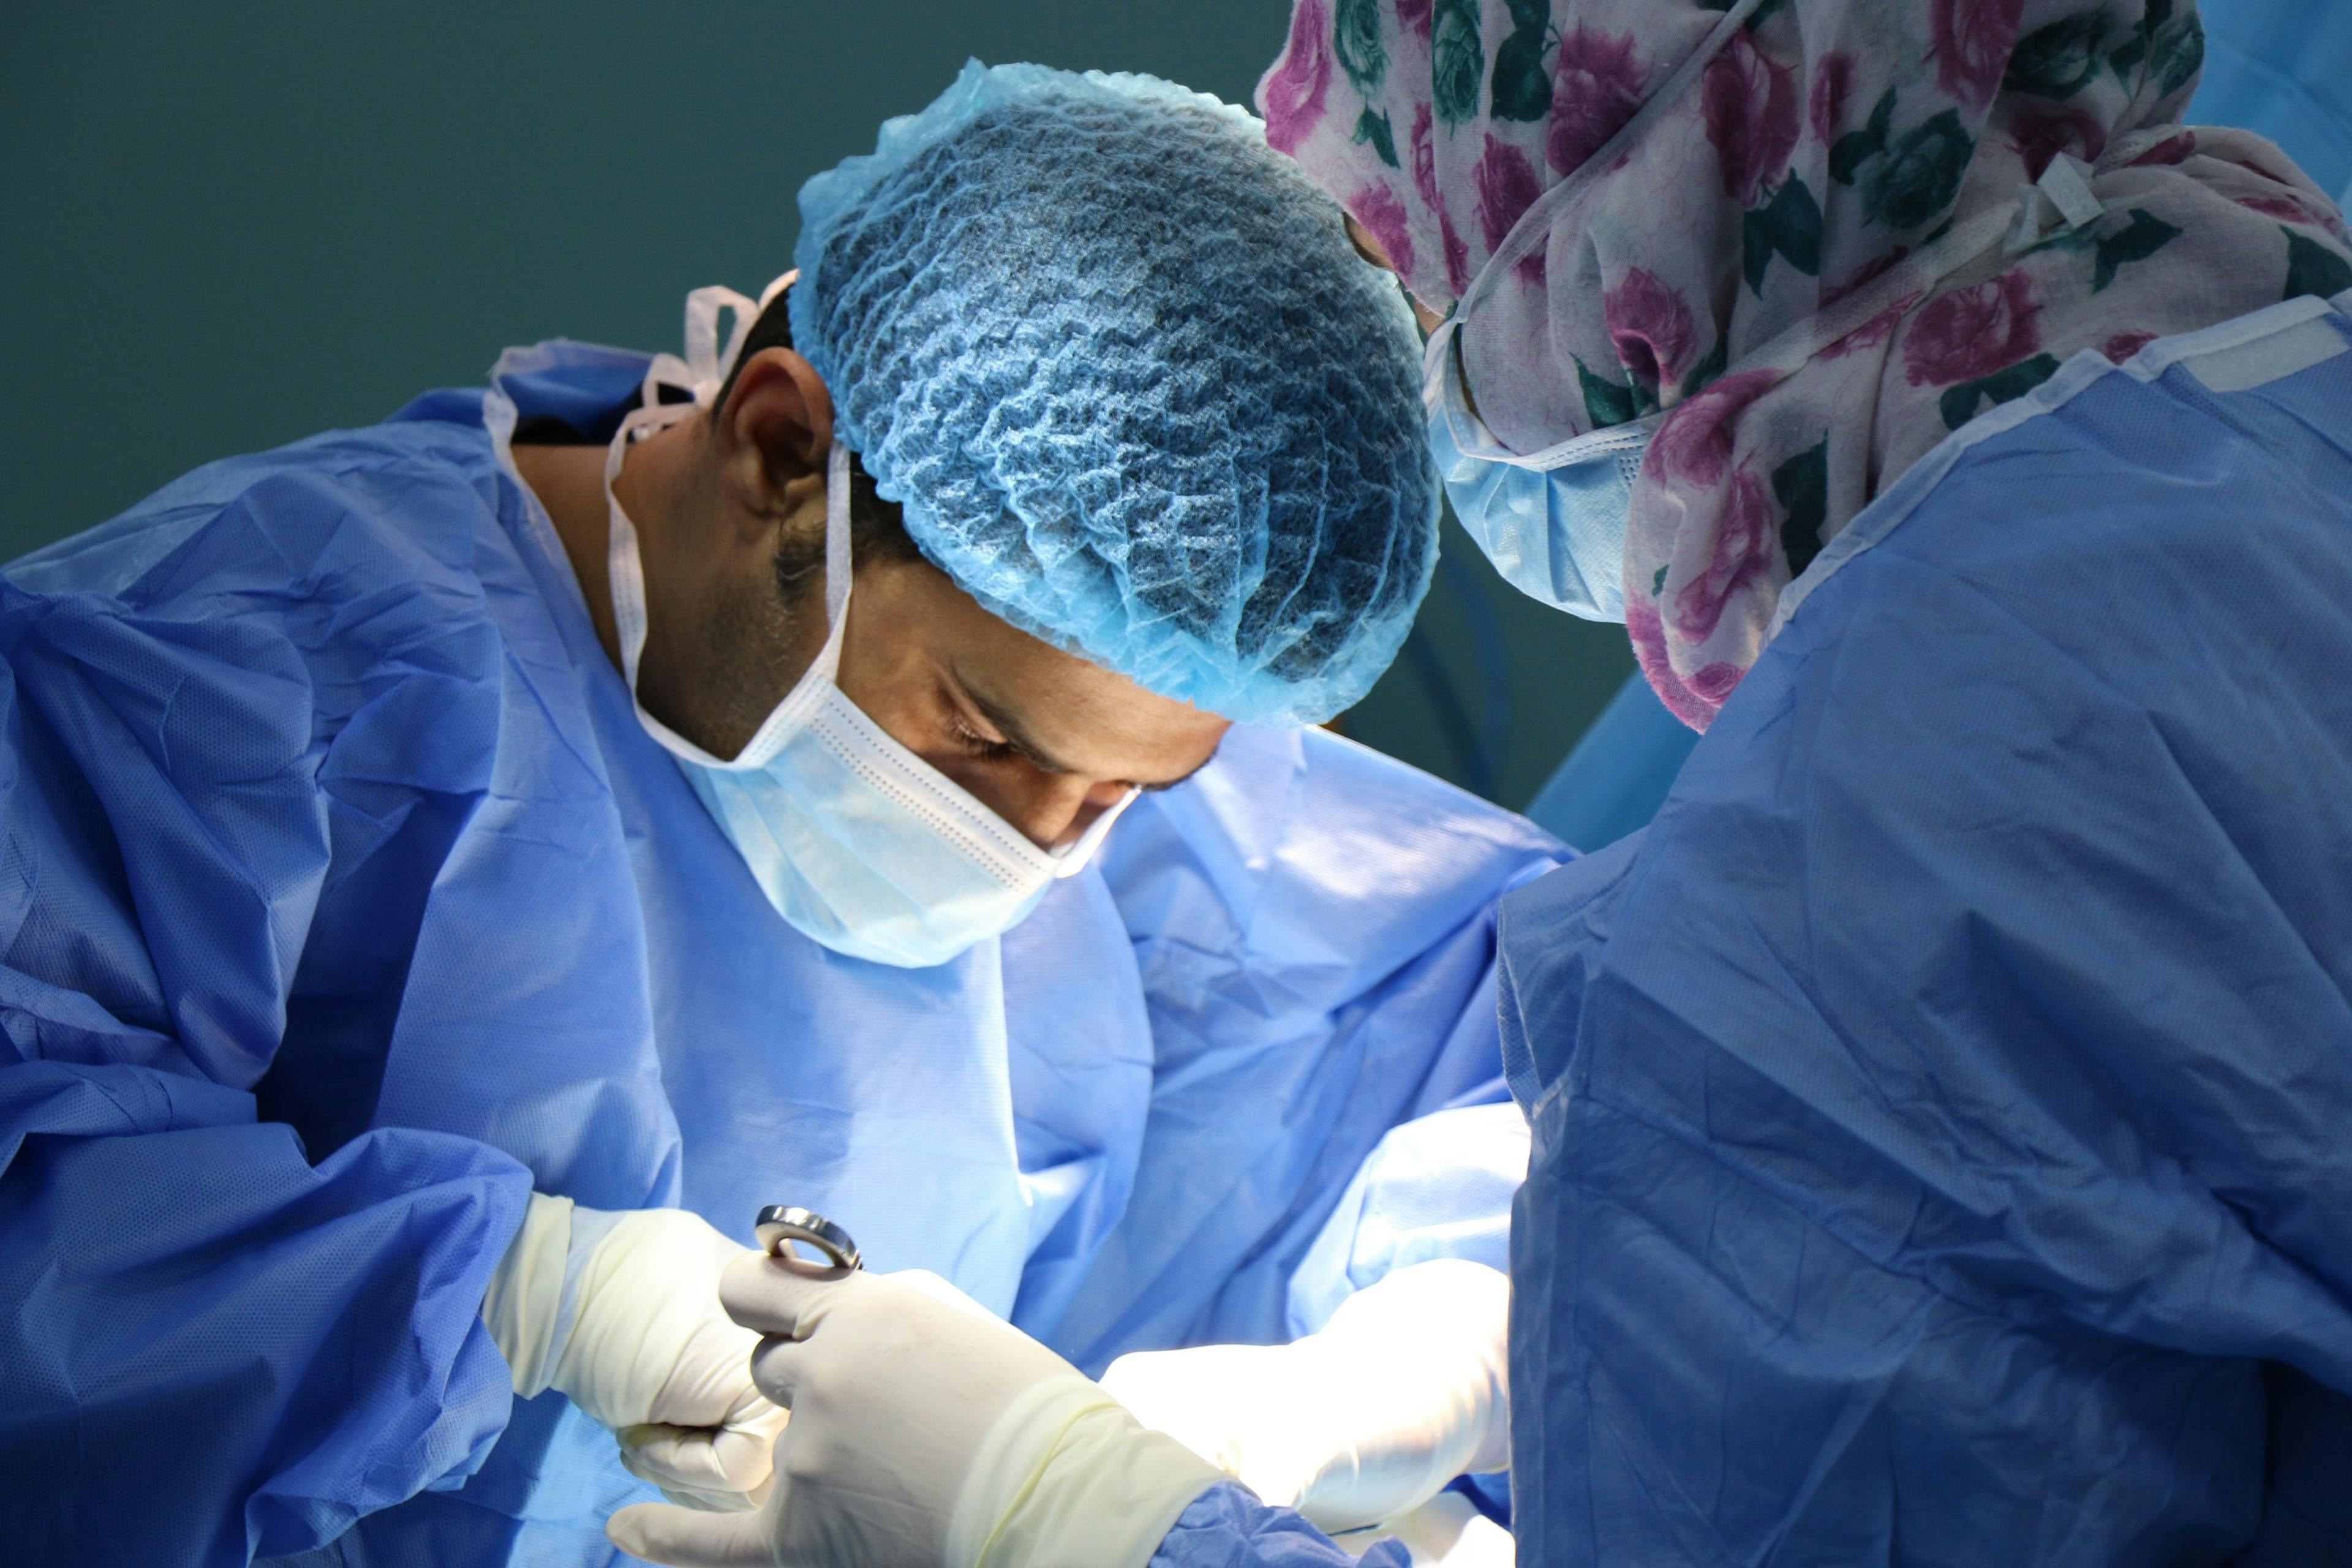 transplant surgery